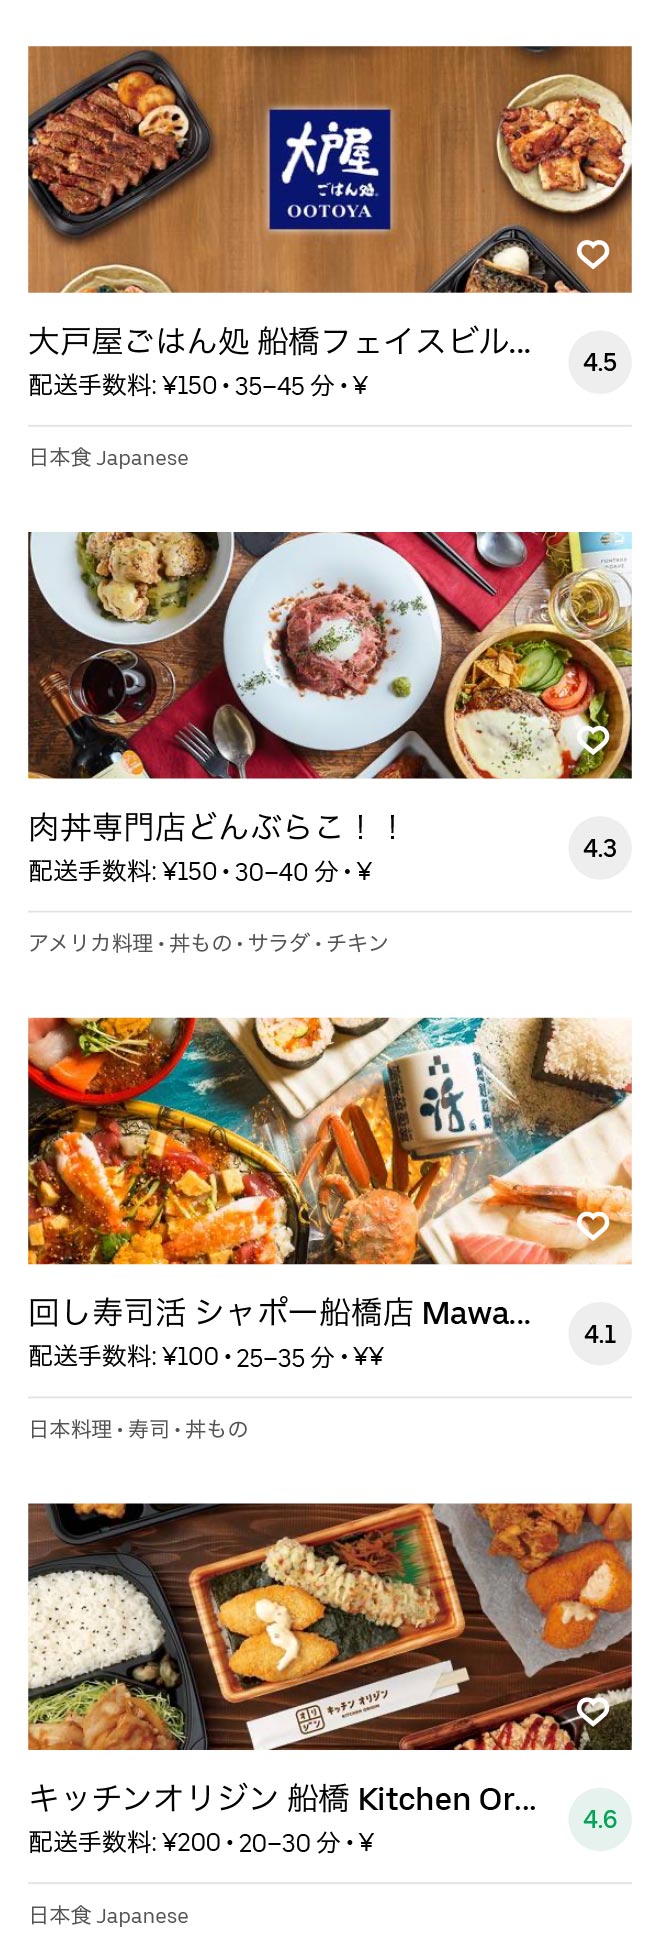 Funabashi menu 2008 11